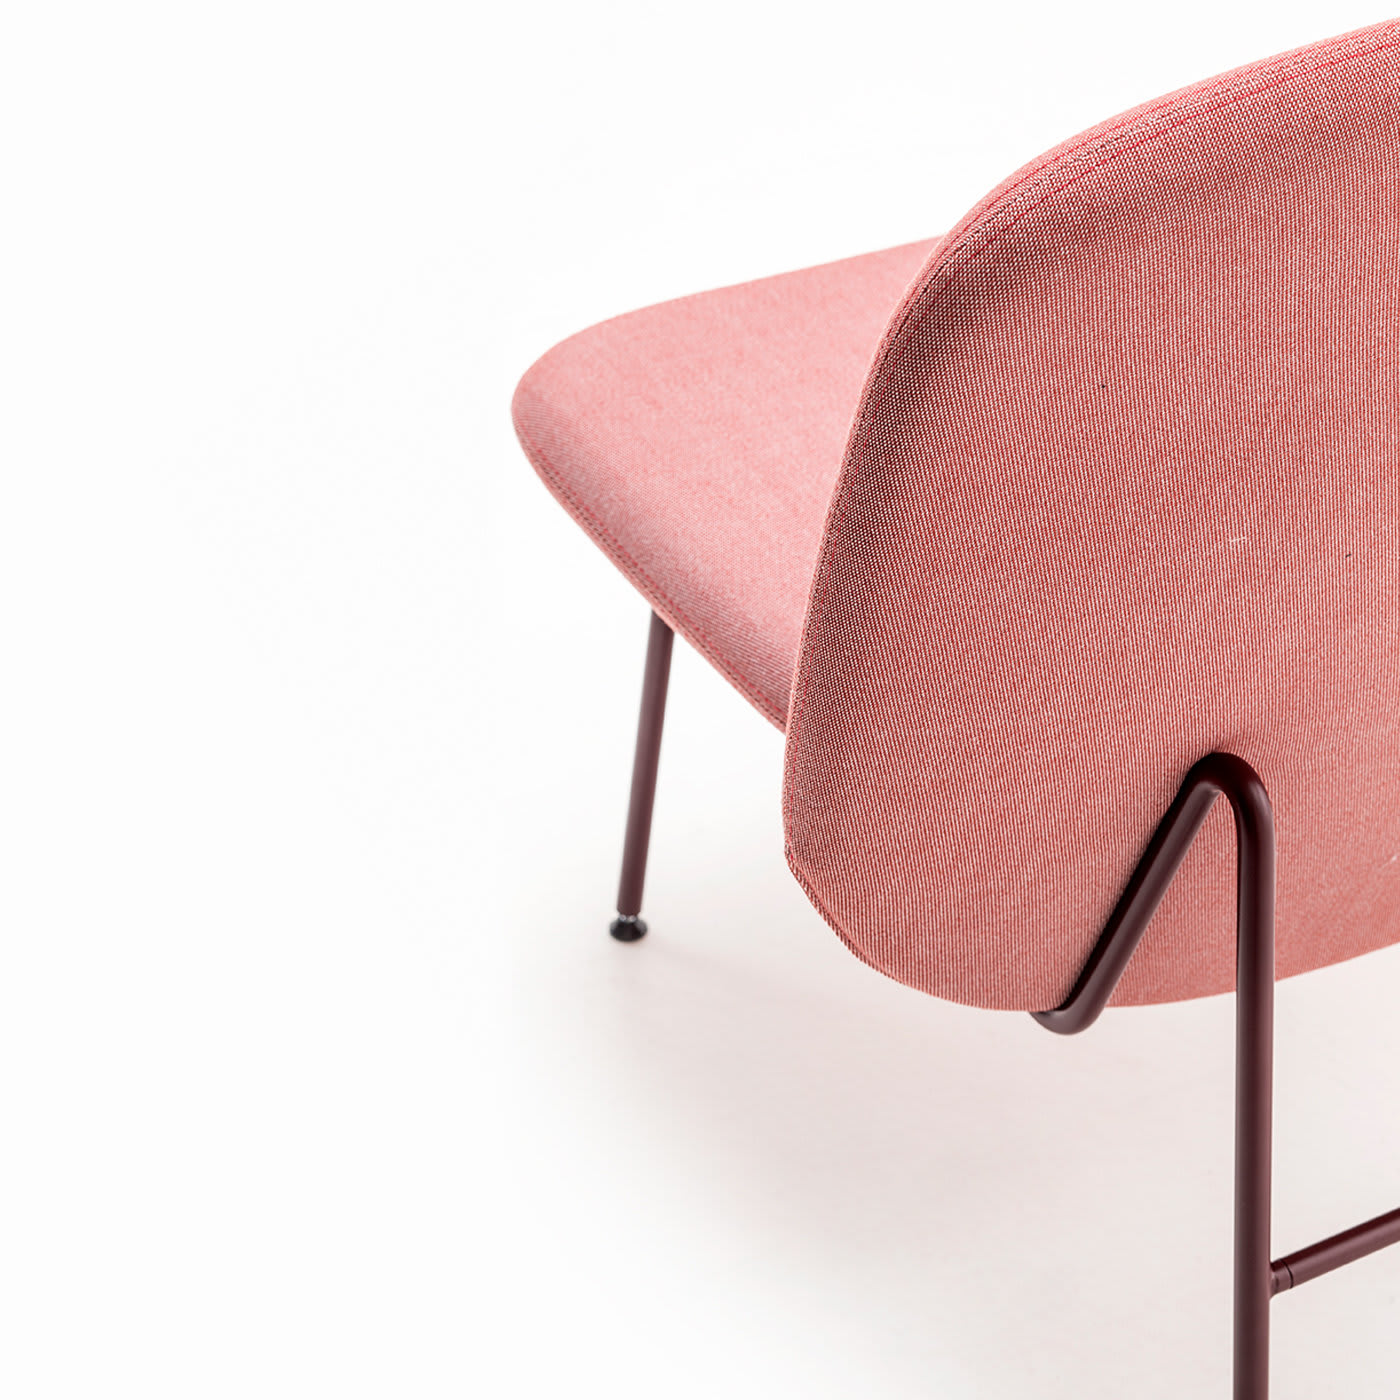 Ala Textured Chair by Sebastian Herkner - La Cividina